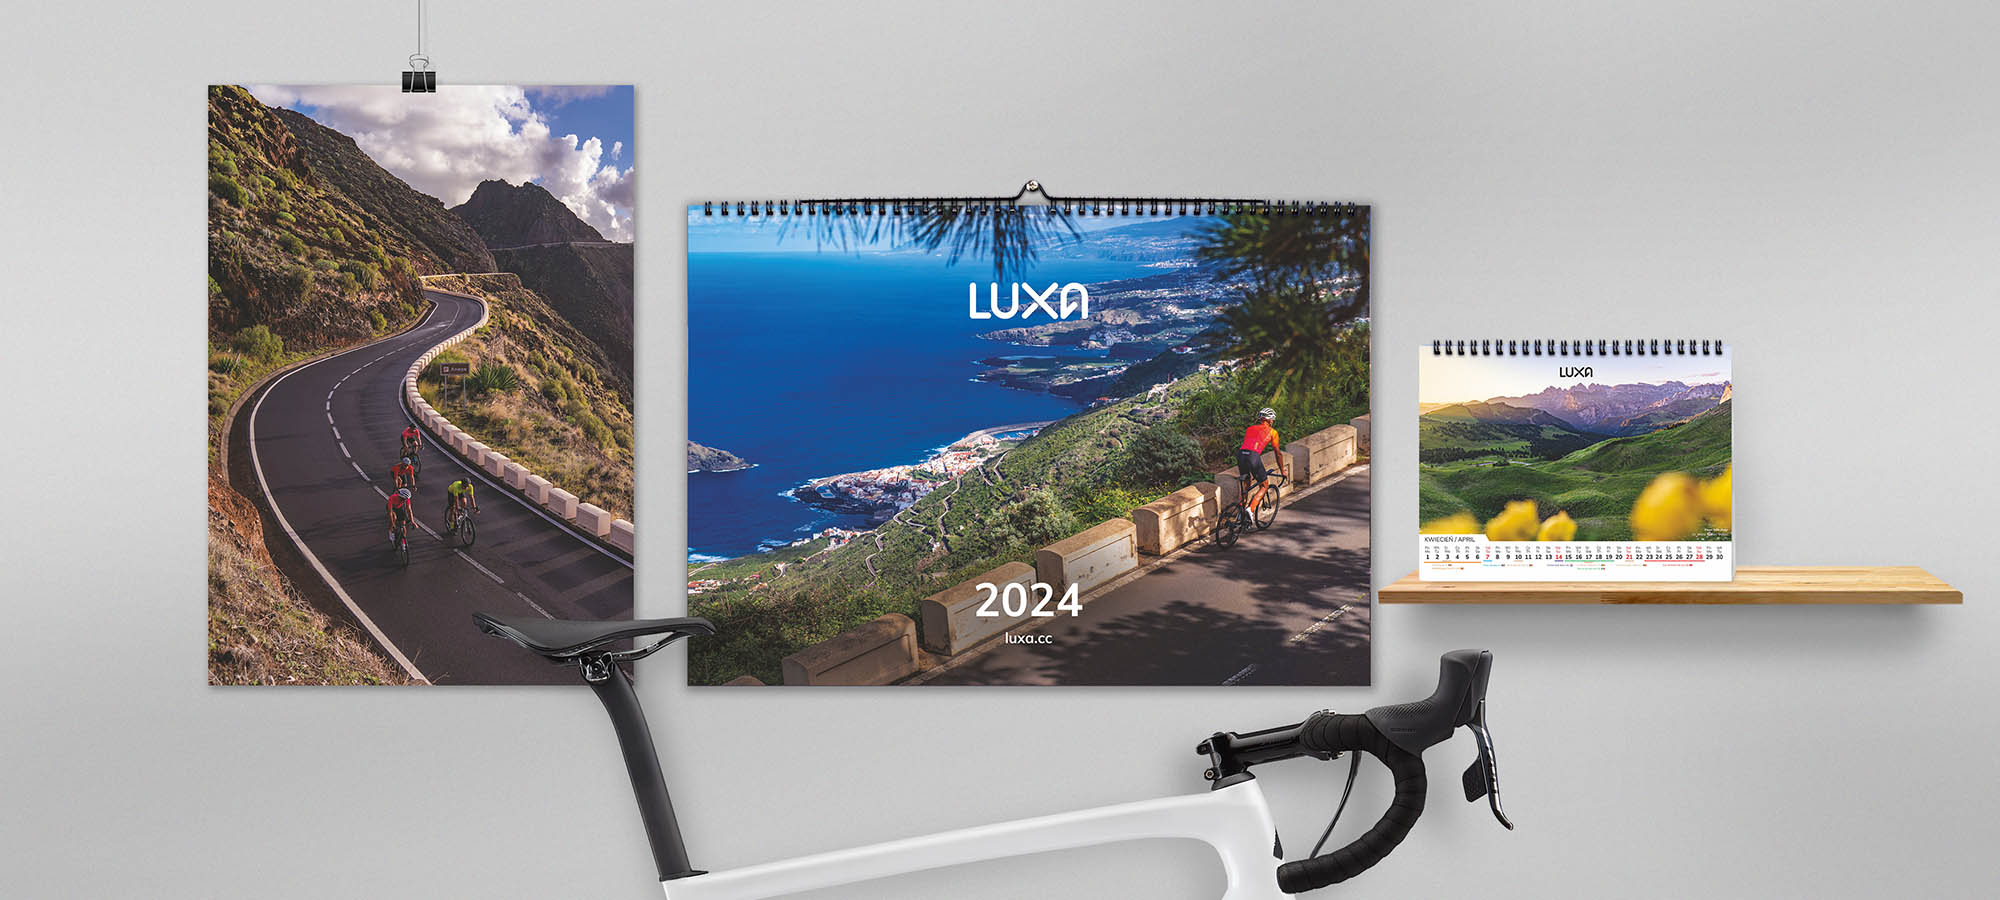 kalendarz kolarski Luxa 2024 - wyścigi szosowe kalendarium UCI